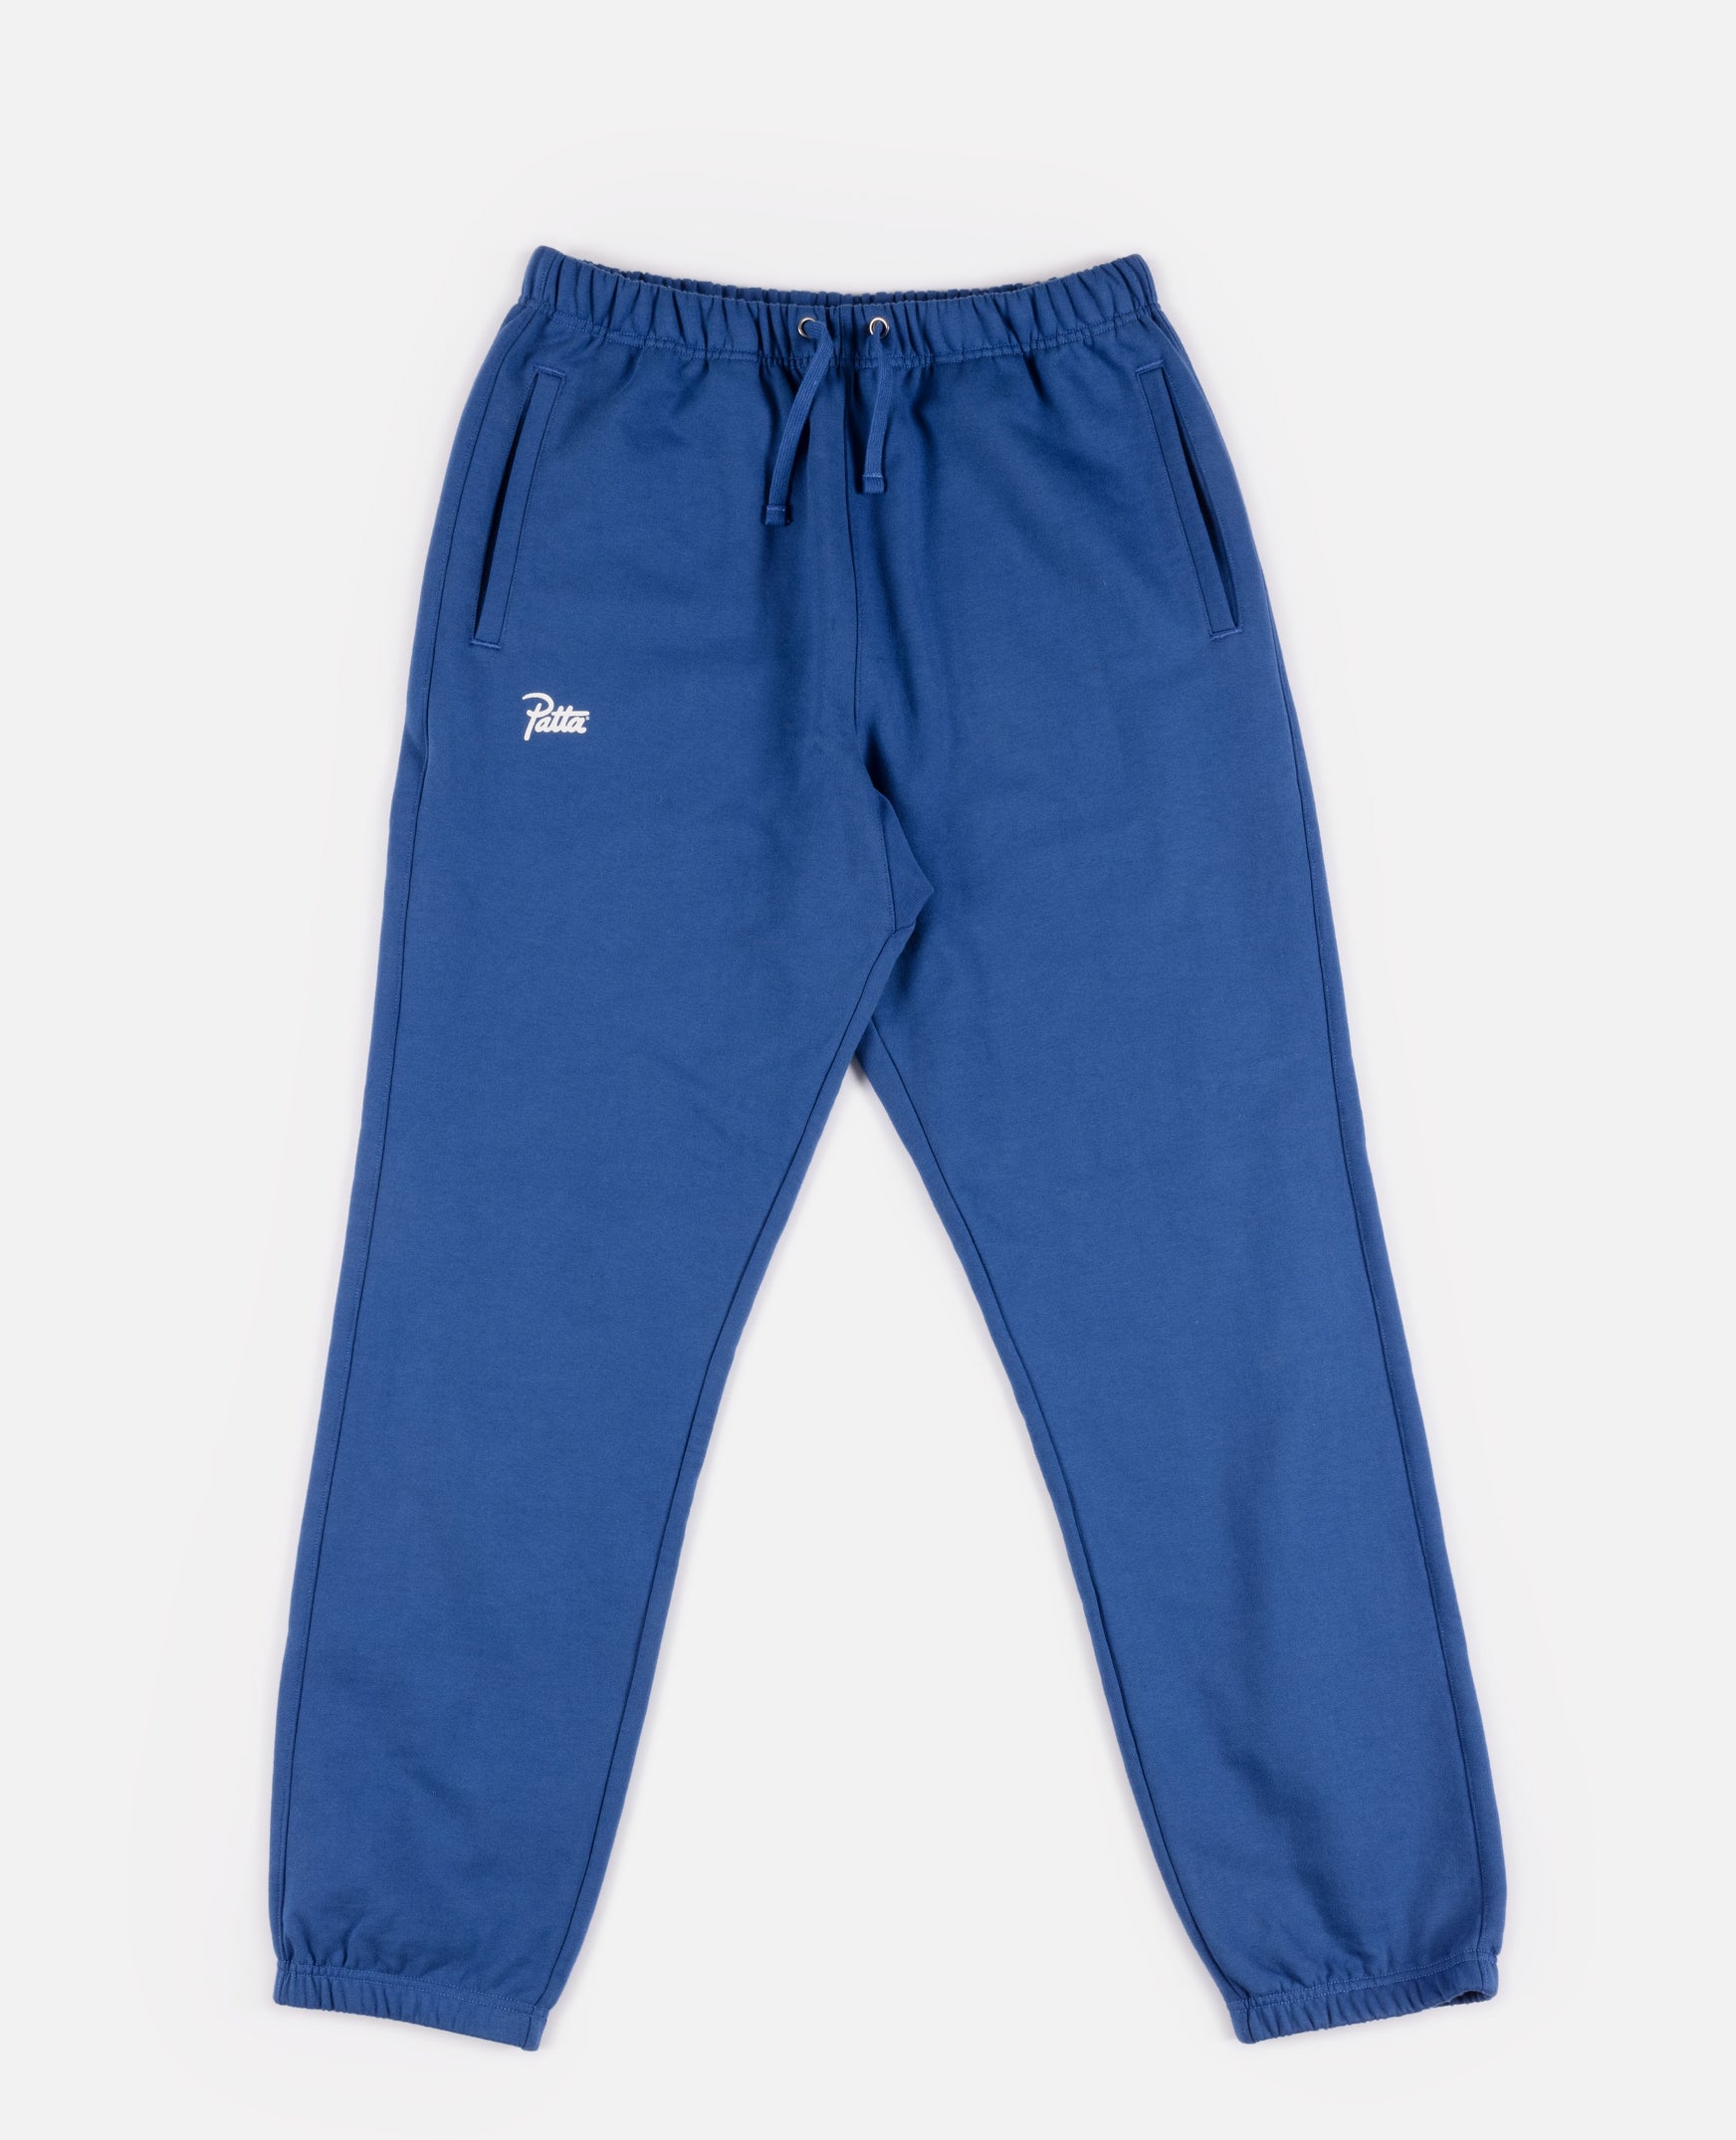 Patta Basic Jogging Pants (Monaco Blue)